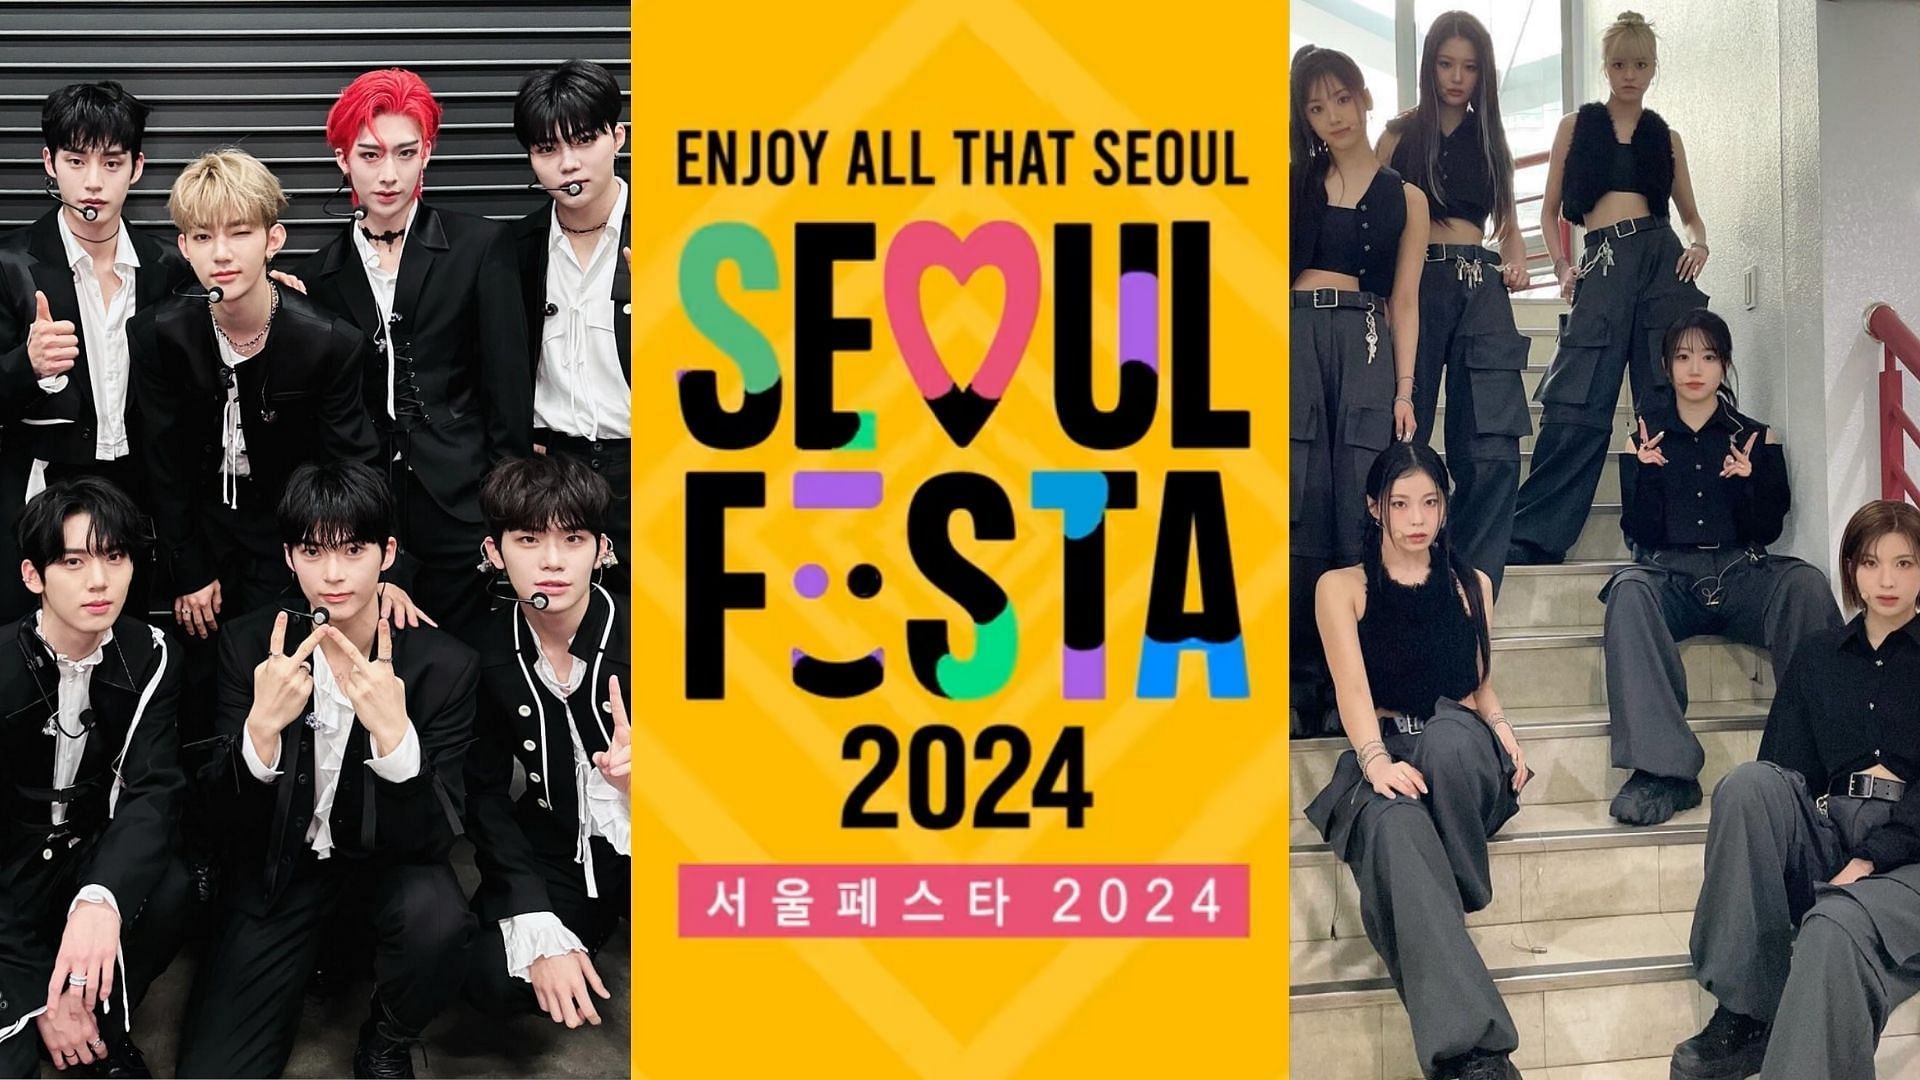 ZEROBASEONE, Seoul Festa, and NMIXX (Image via Instagram/@zb1_official, @nmixx_official, @seoulfesta_official)